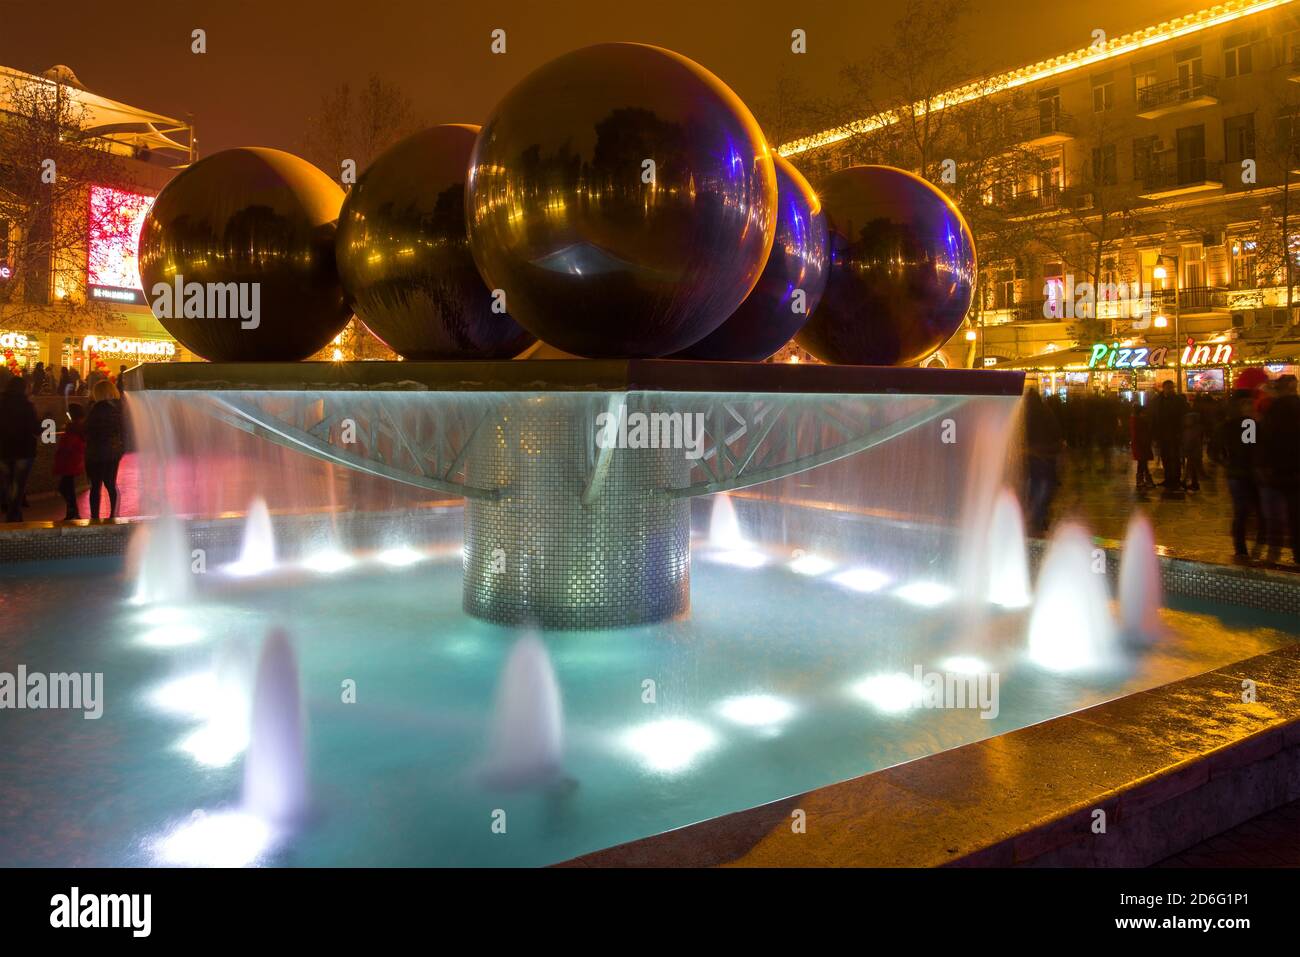 BAKU, AZERBAIJAN - DECEMBER 30, 2017: Fountain with balloons close up on December evening Stock Photo